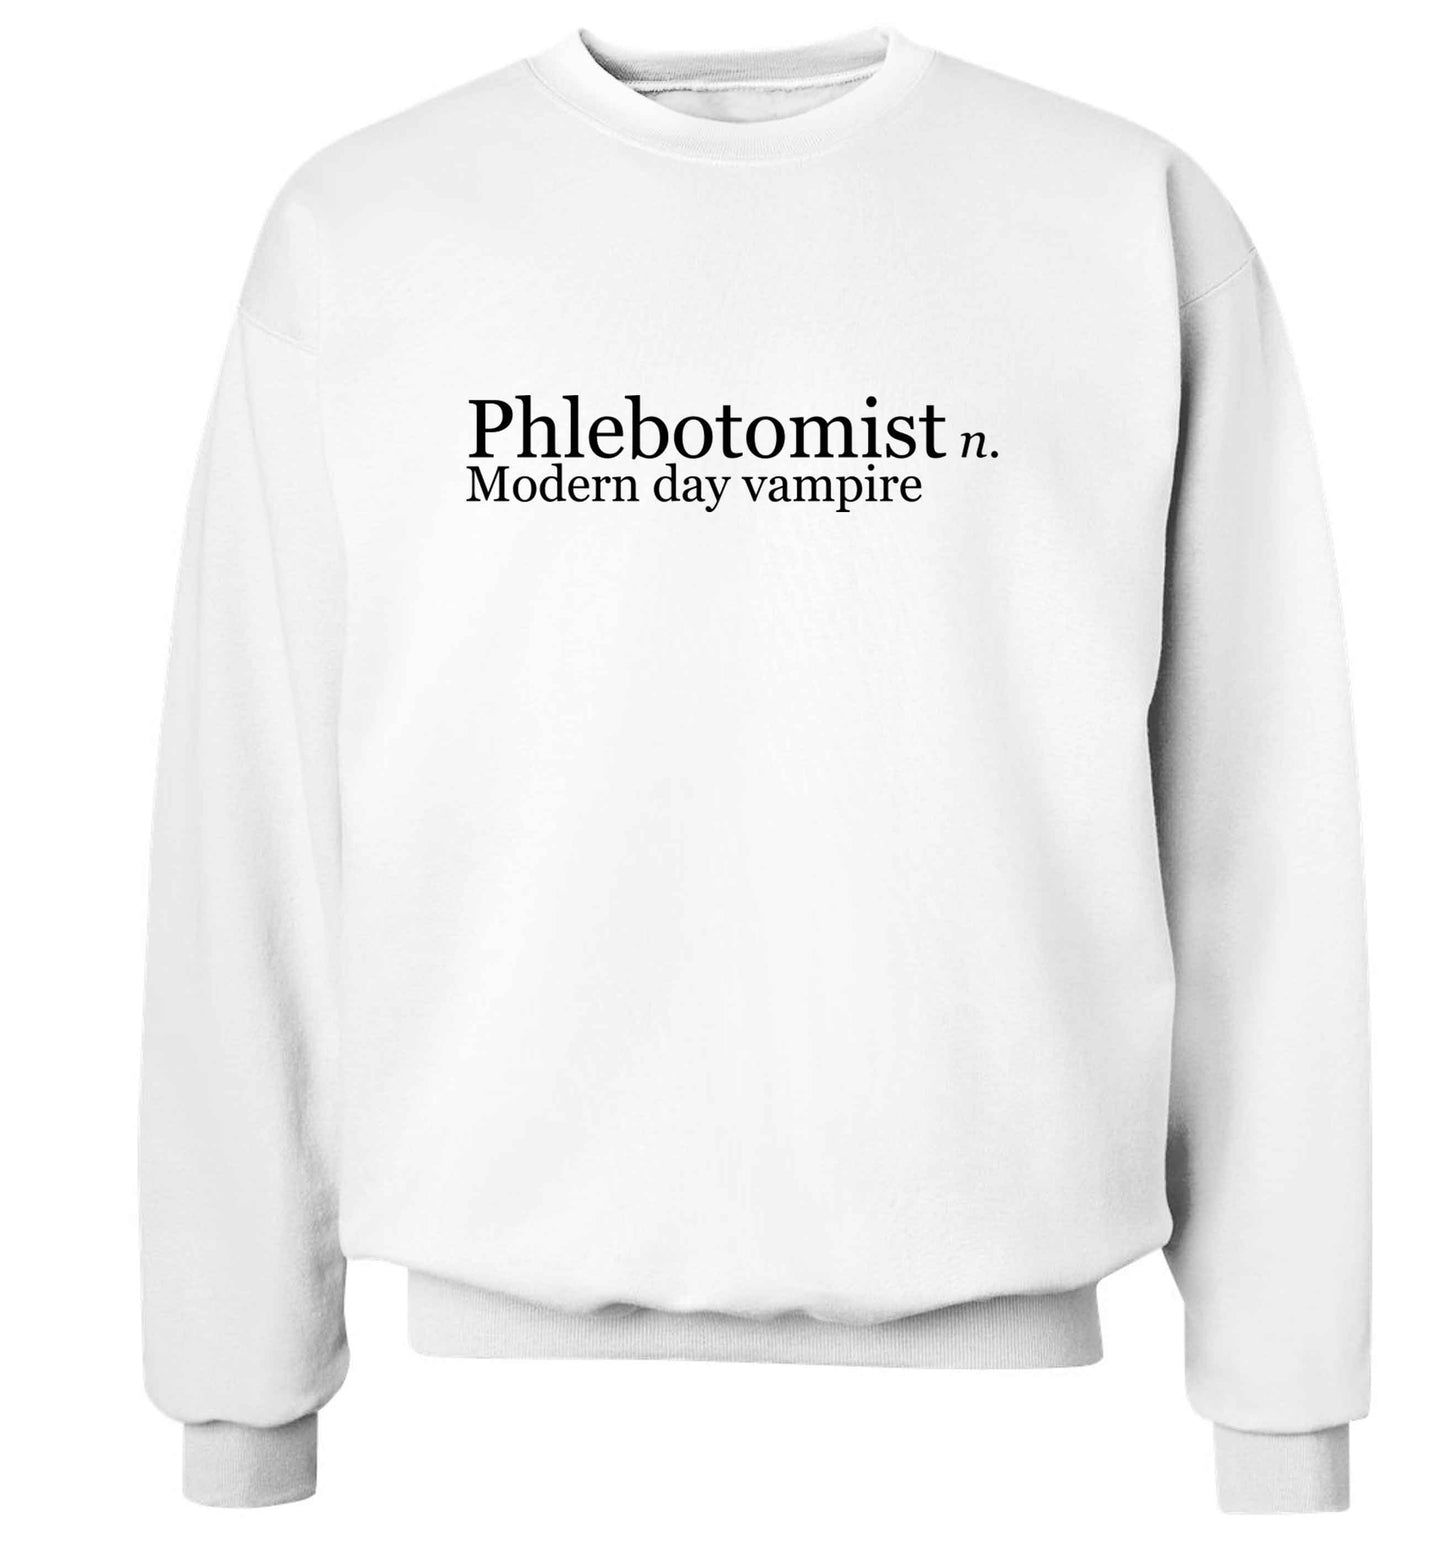 Phlebotomist - Modern day vampire adult's unisex white sweater 2XL